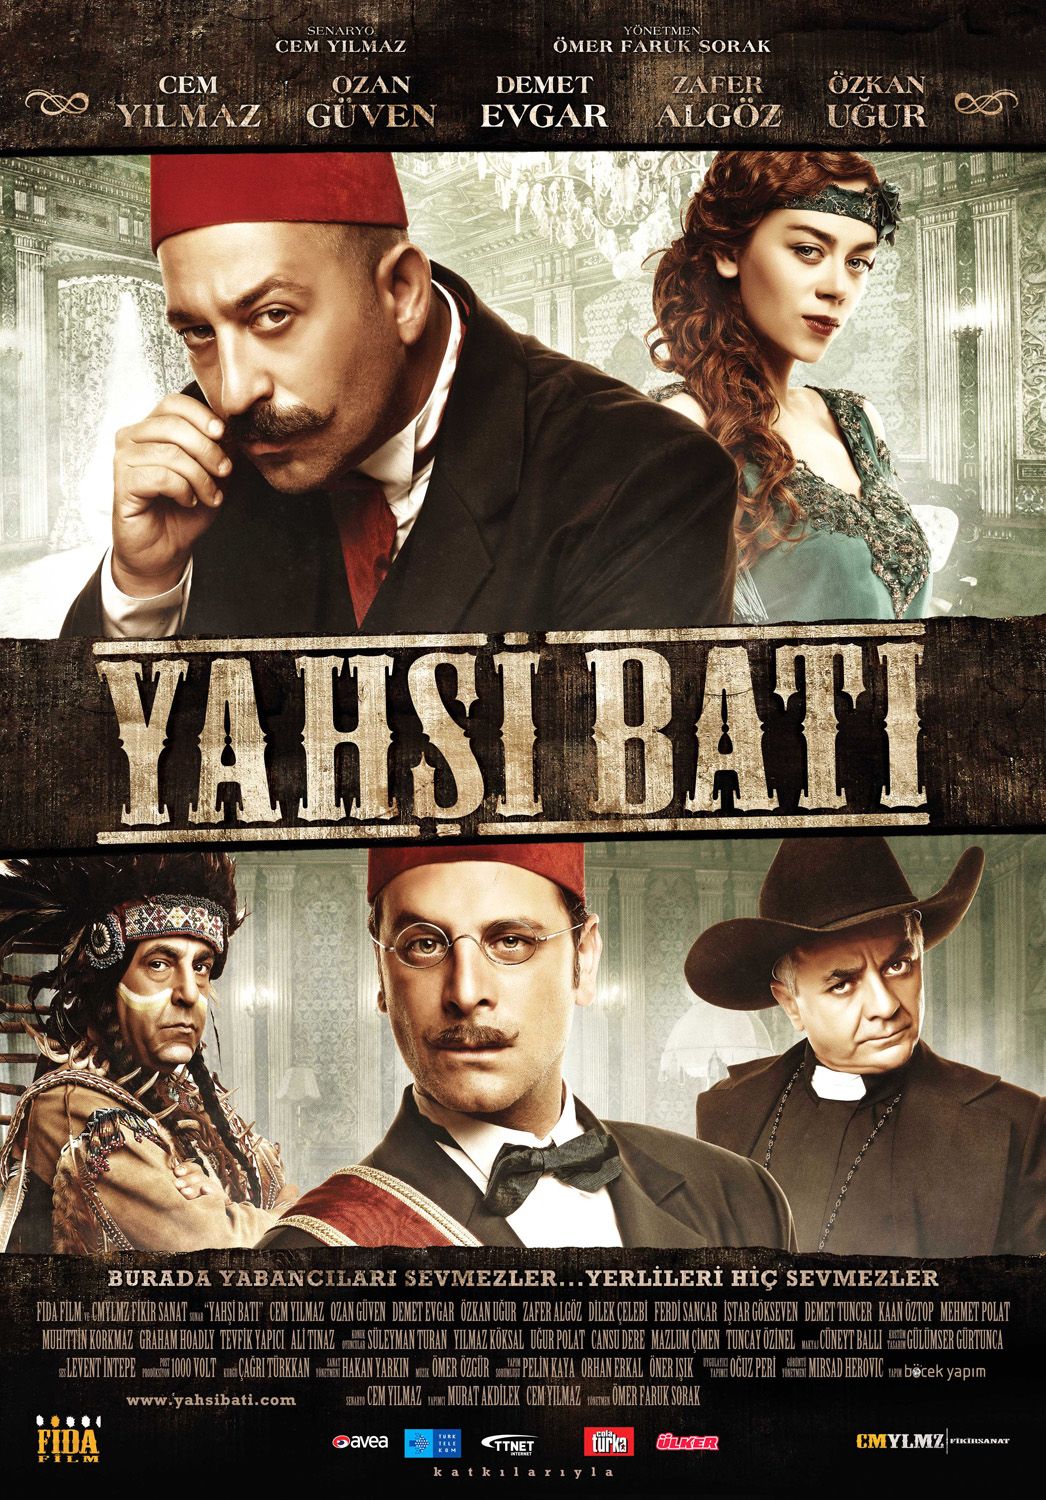 Extra Large Movie Poster Image for Yahsi bati (#2 of 4)